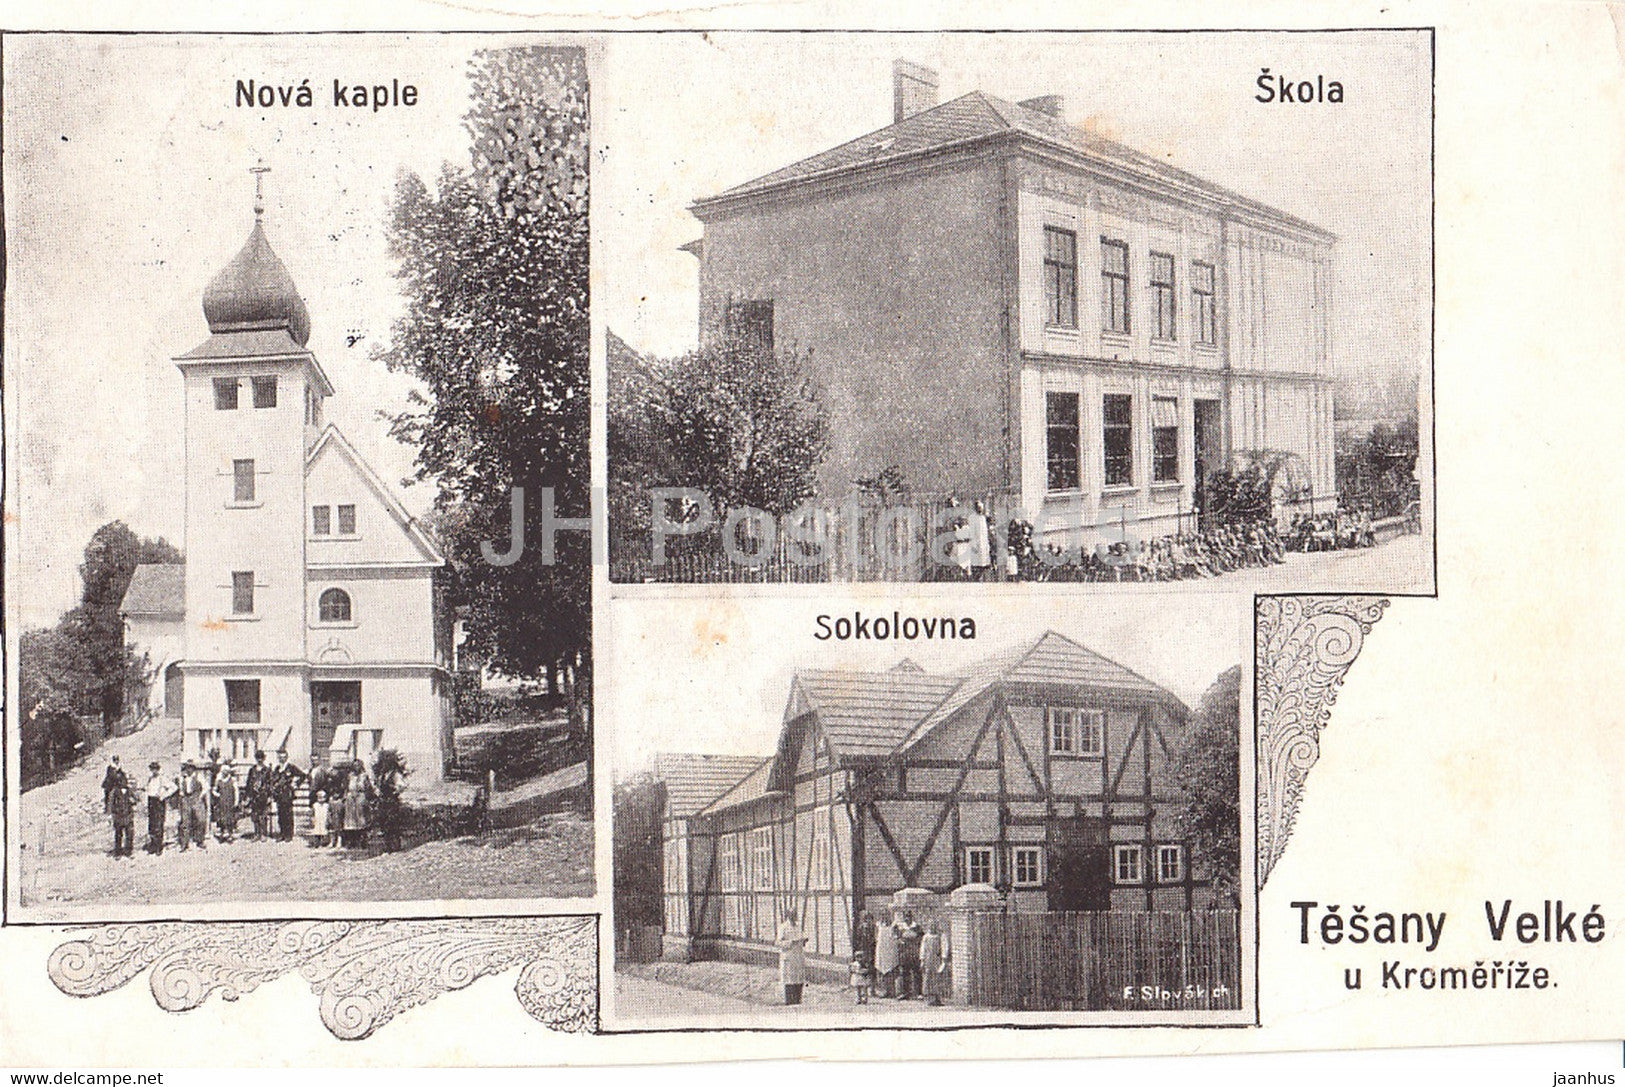 Tesany Velke u Kromerize - school - old postcard - 1930 - Czech Republic - Czechoslovakia - used - JH Postcards